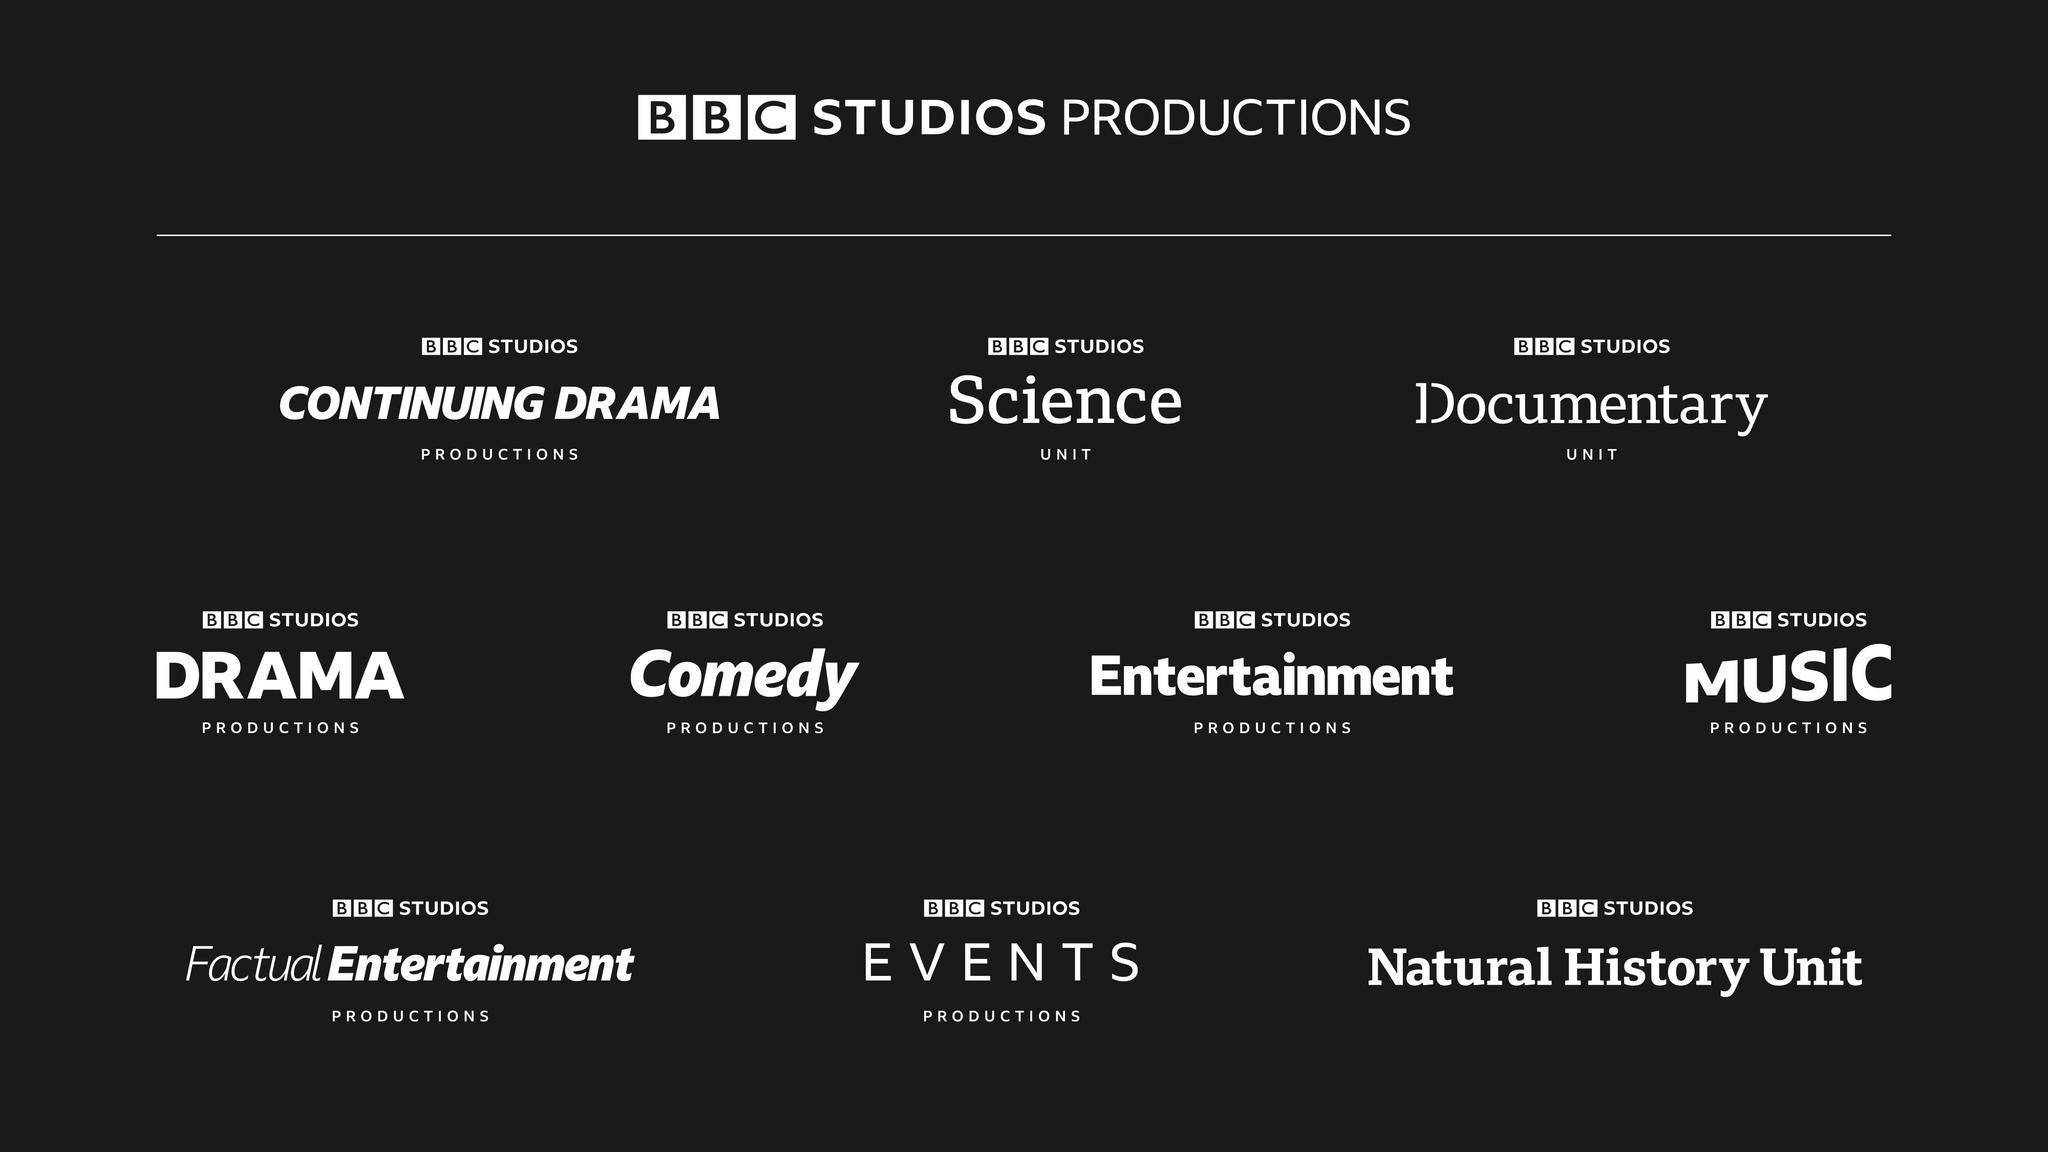 BBC Studios Productions